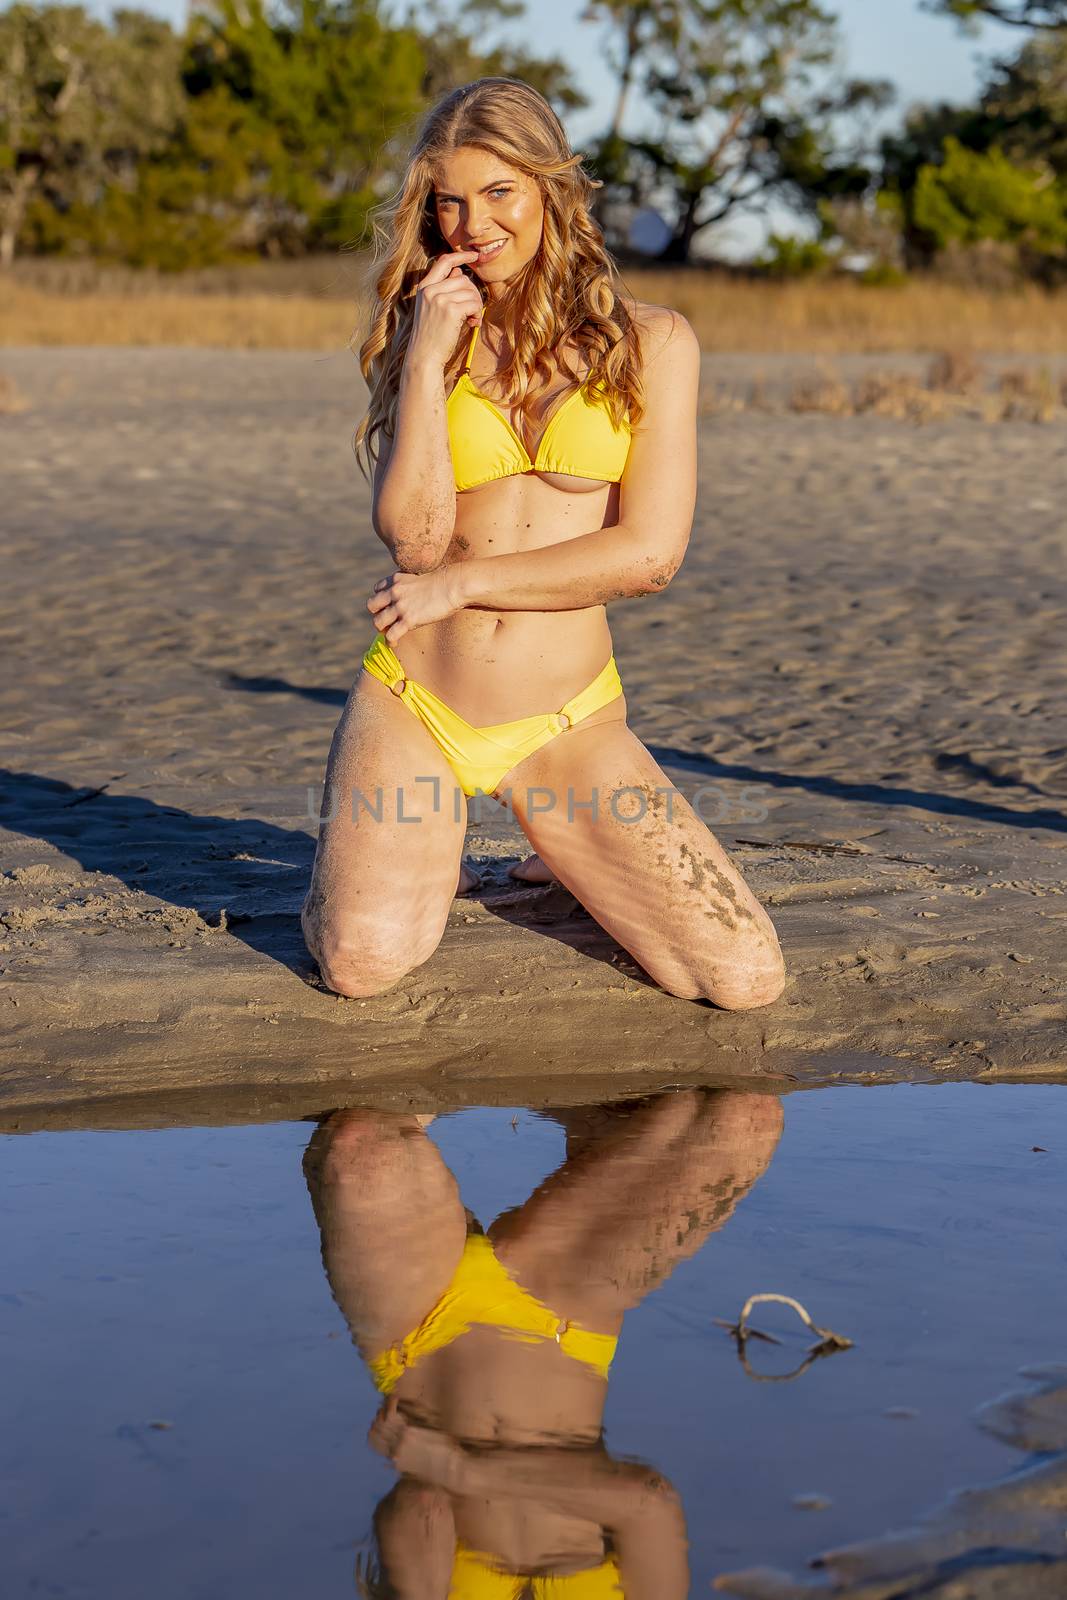 Beautiful Bikini Model Posing In A Beach Environment by actionsports